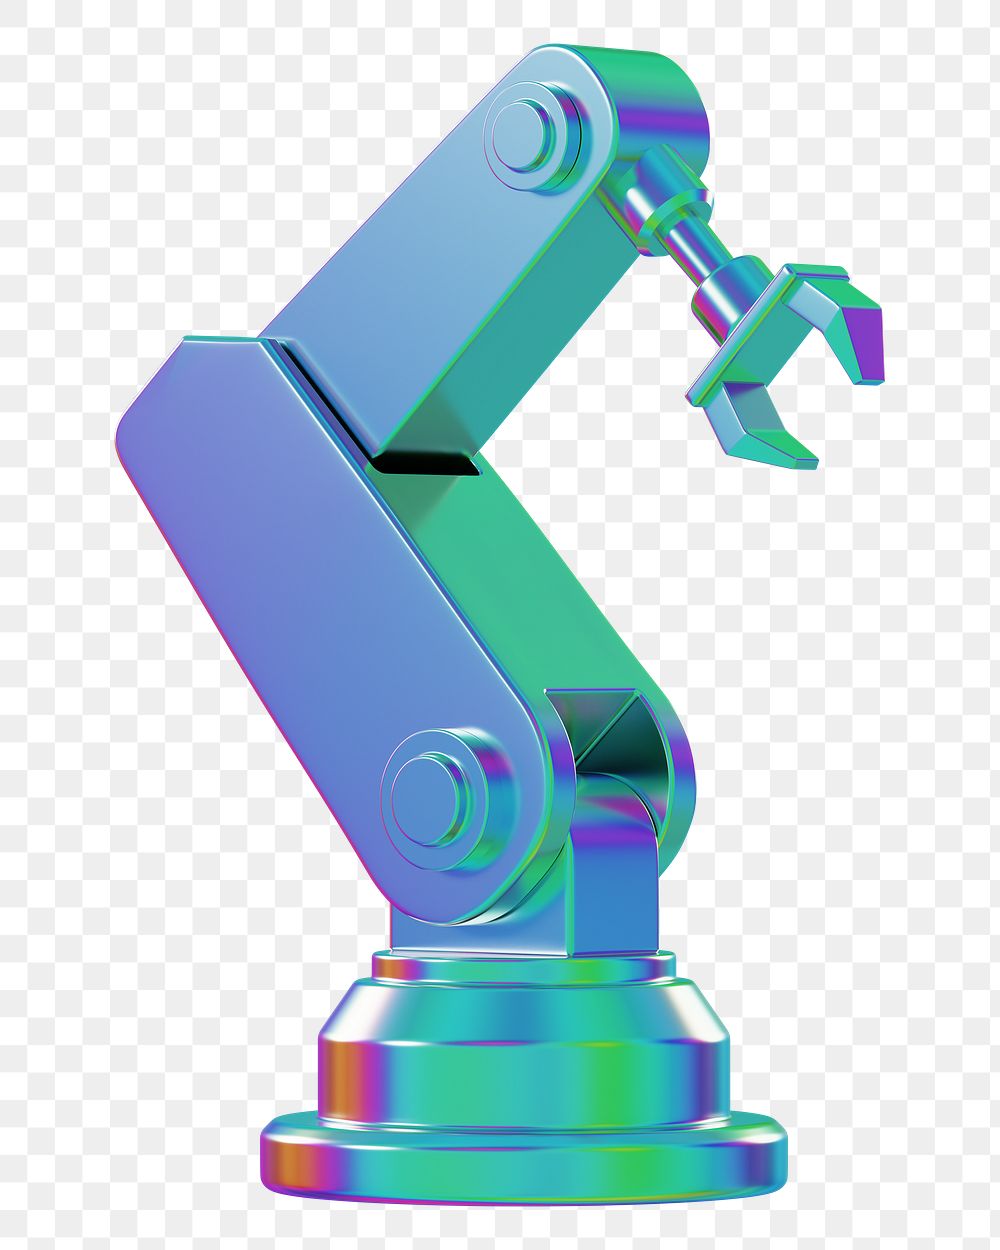 PNG 3D holographic factory robot, element illustration, transparent background